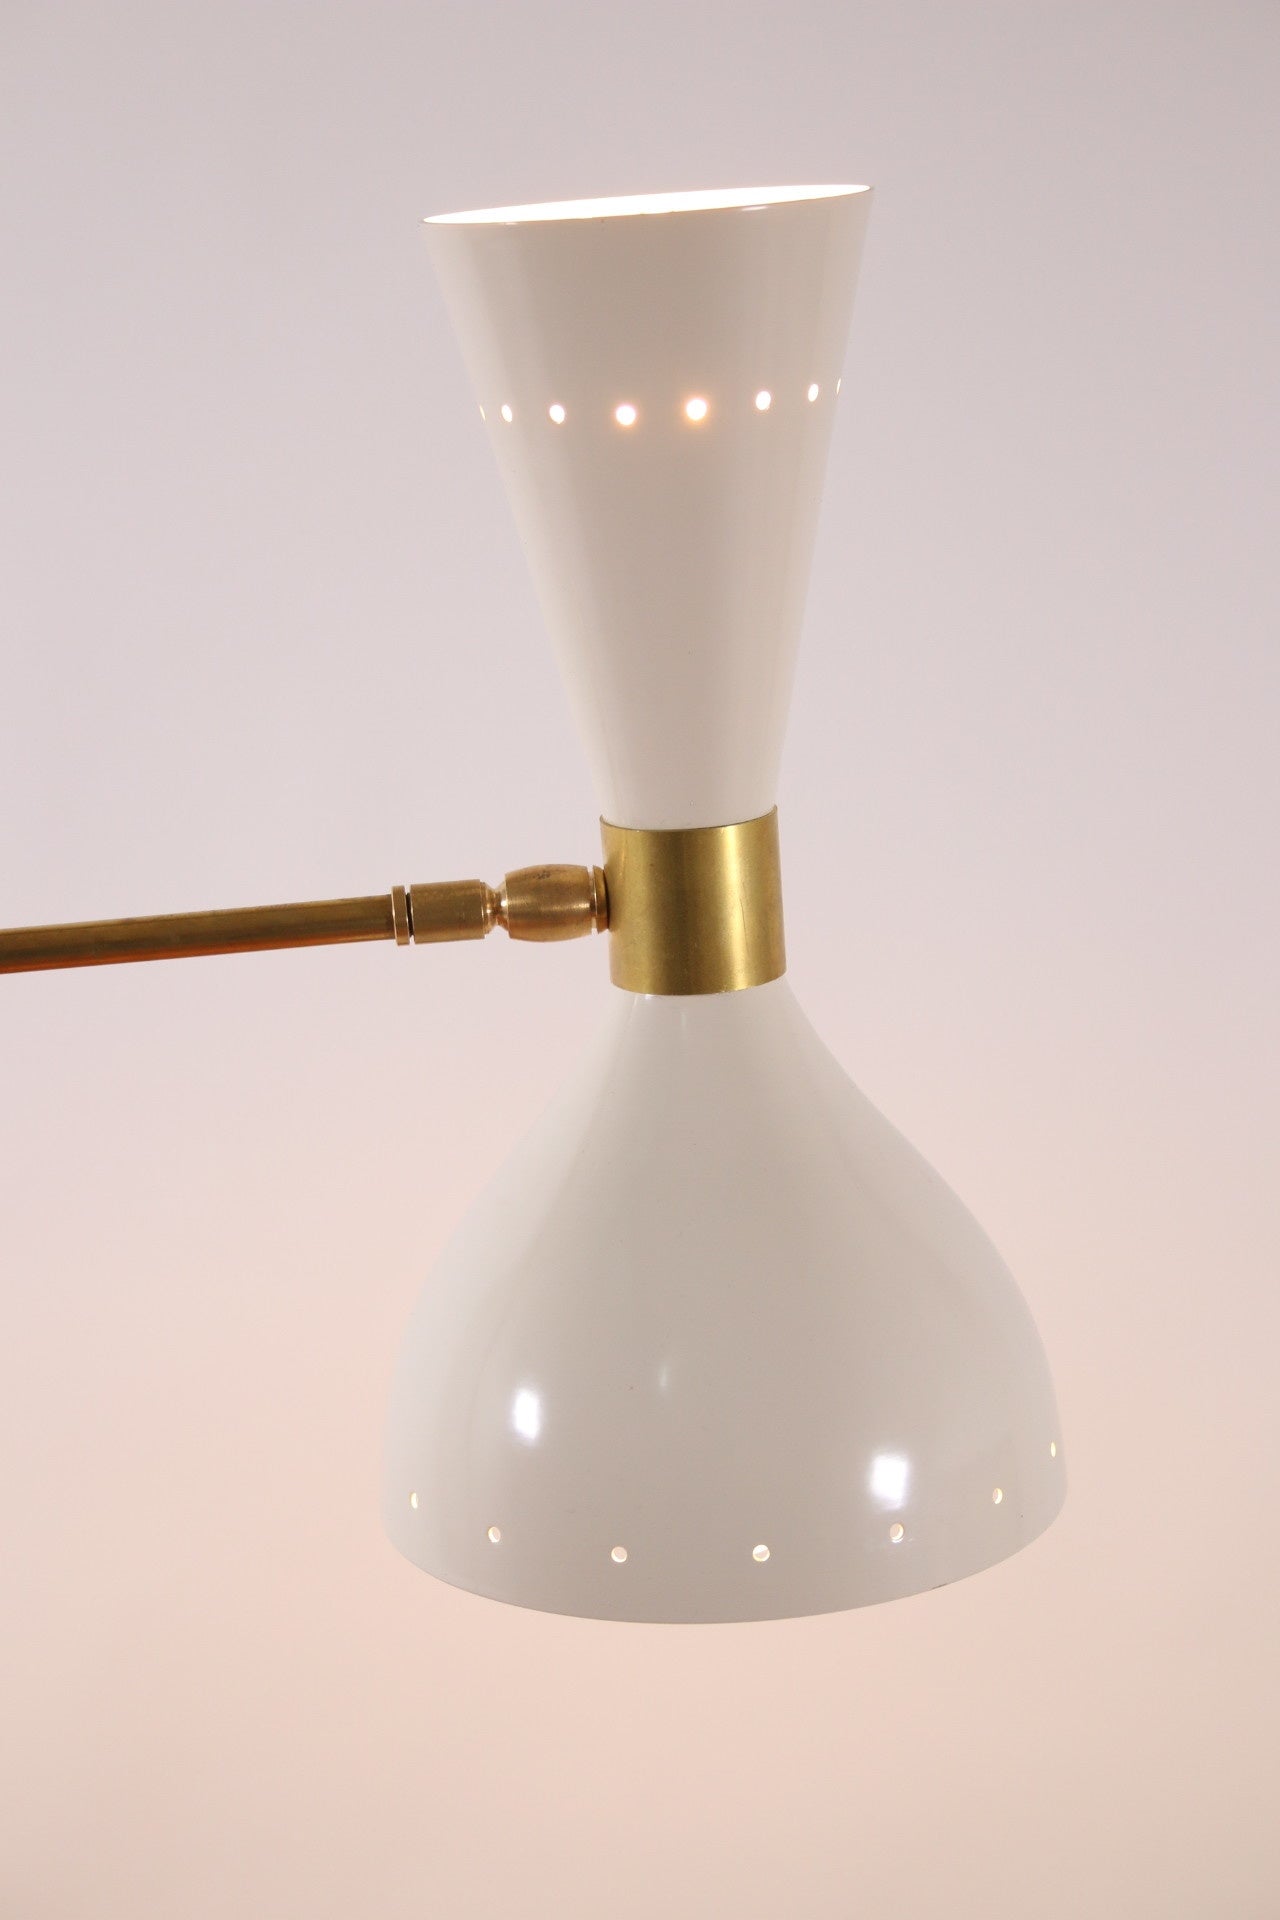 Grote lange Big Thunderball Balancer Lamp Italy 1960 detail lamp zijkant